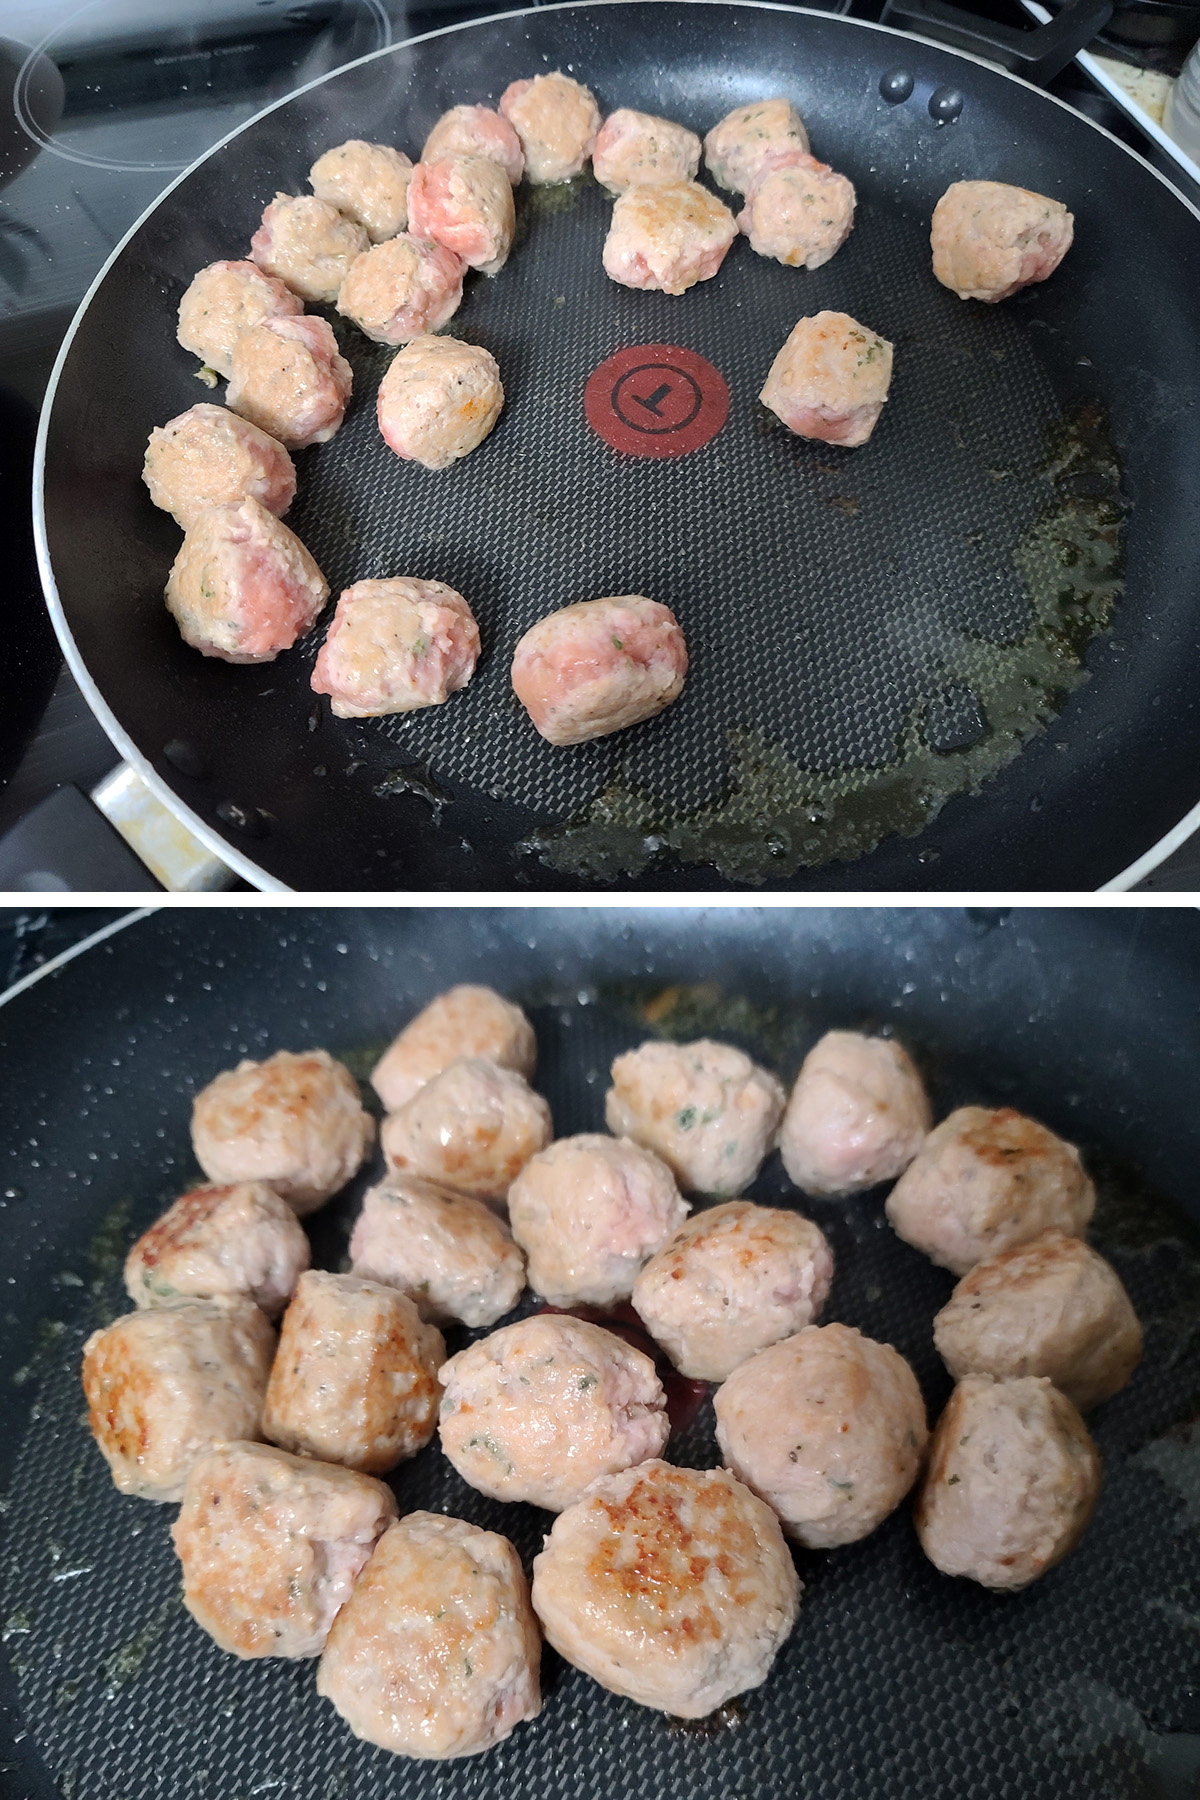 Chicken meatballs cooking in a nonstick pan.